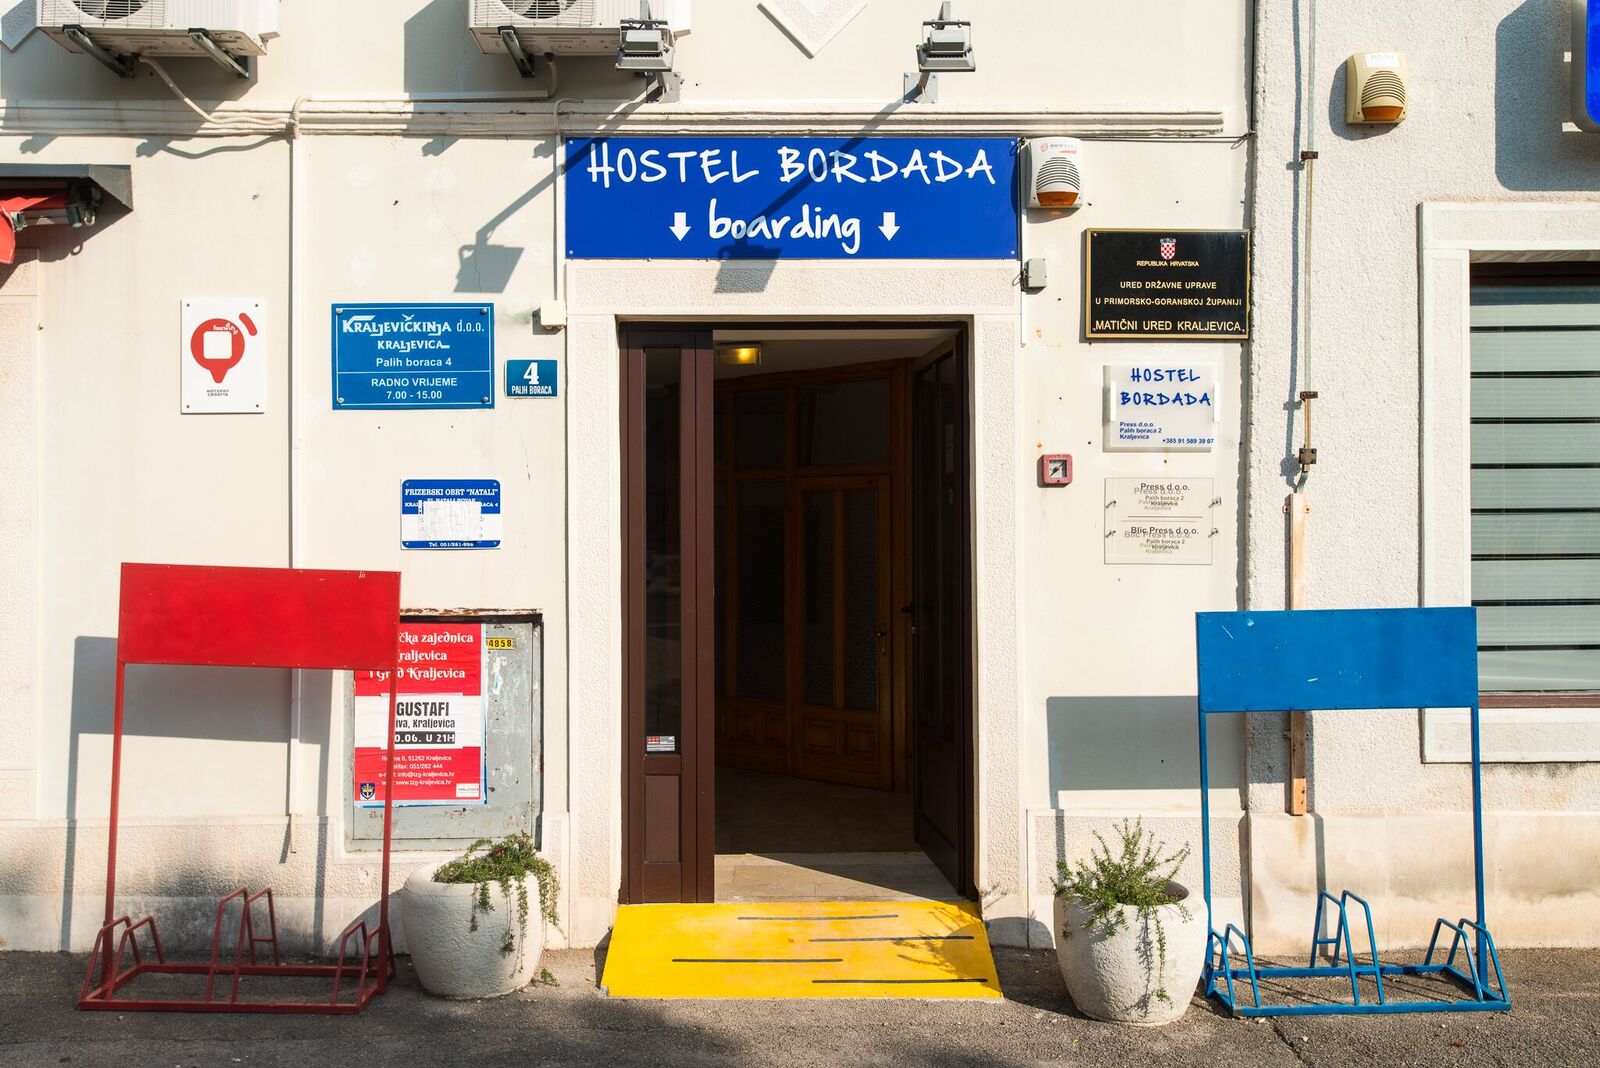 Hostel "Bordada" photo by Ranko Frka